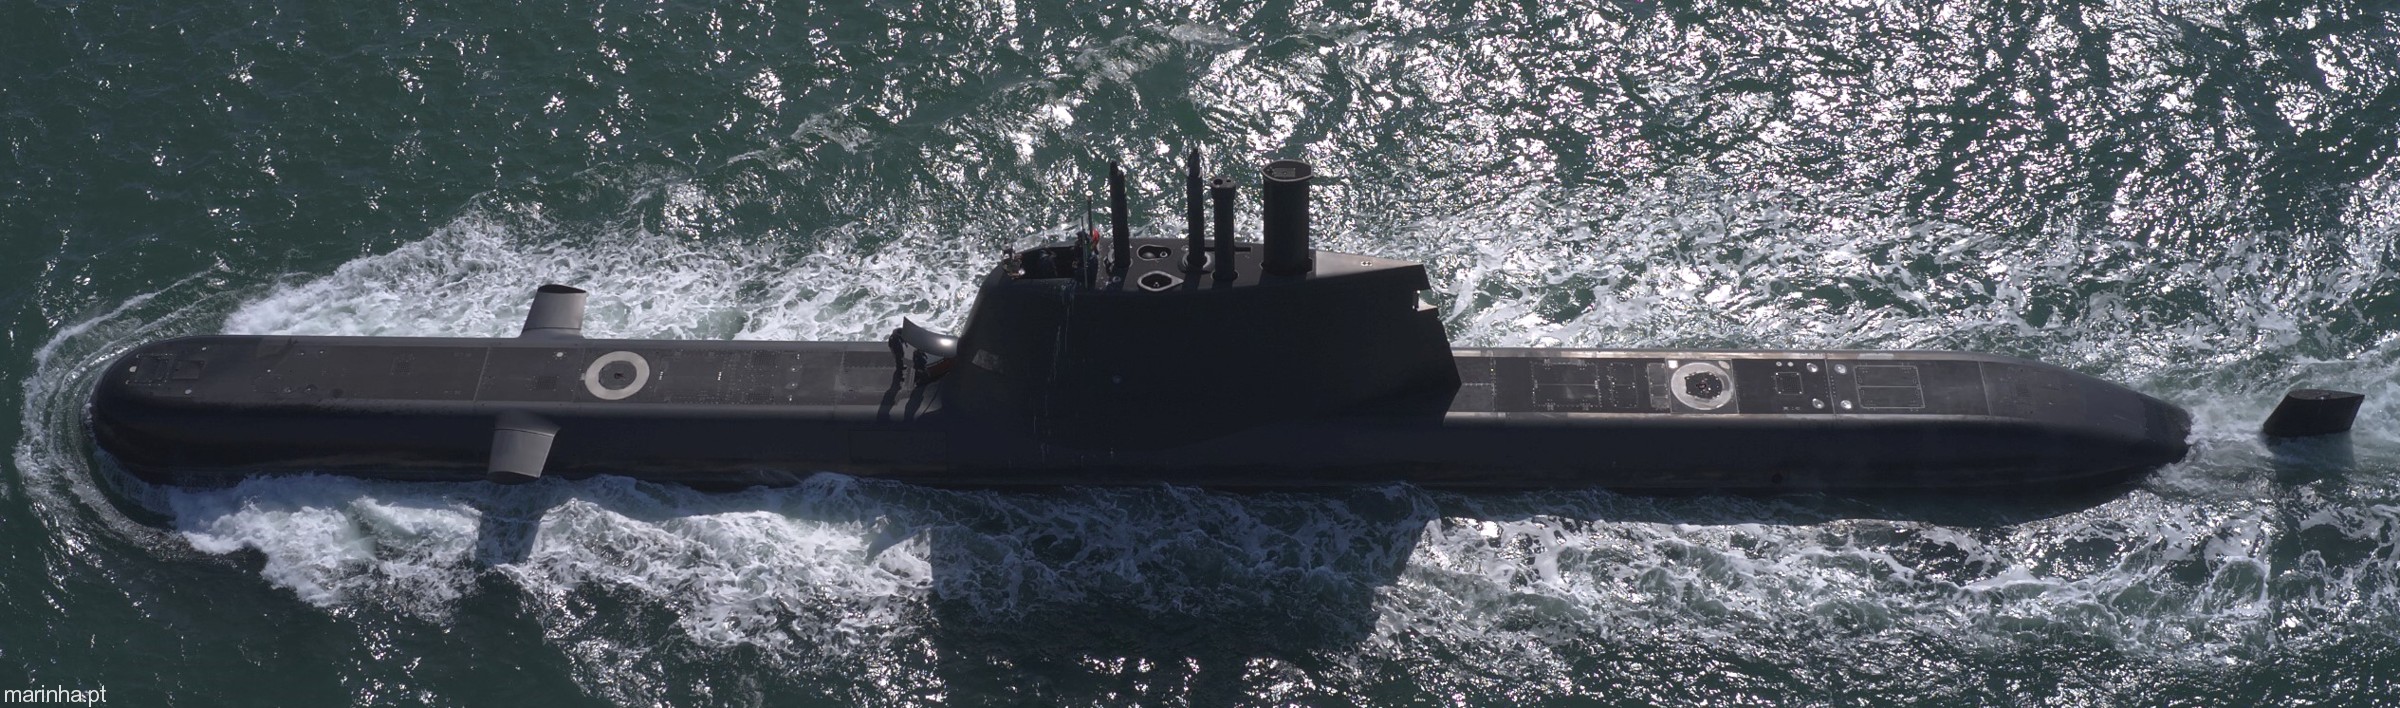 s-160 nrp tridente class type 209pn attack submarine ssk aip portuguese navy marinha 16